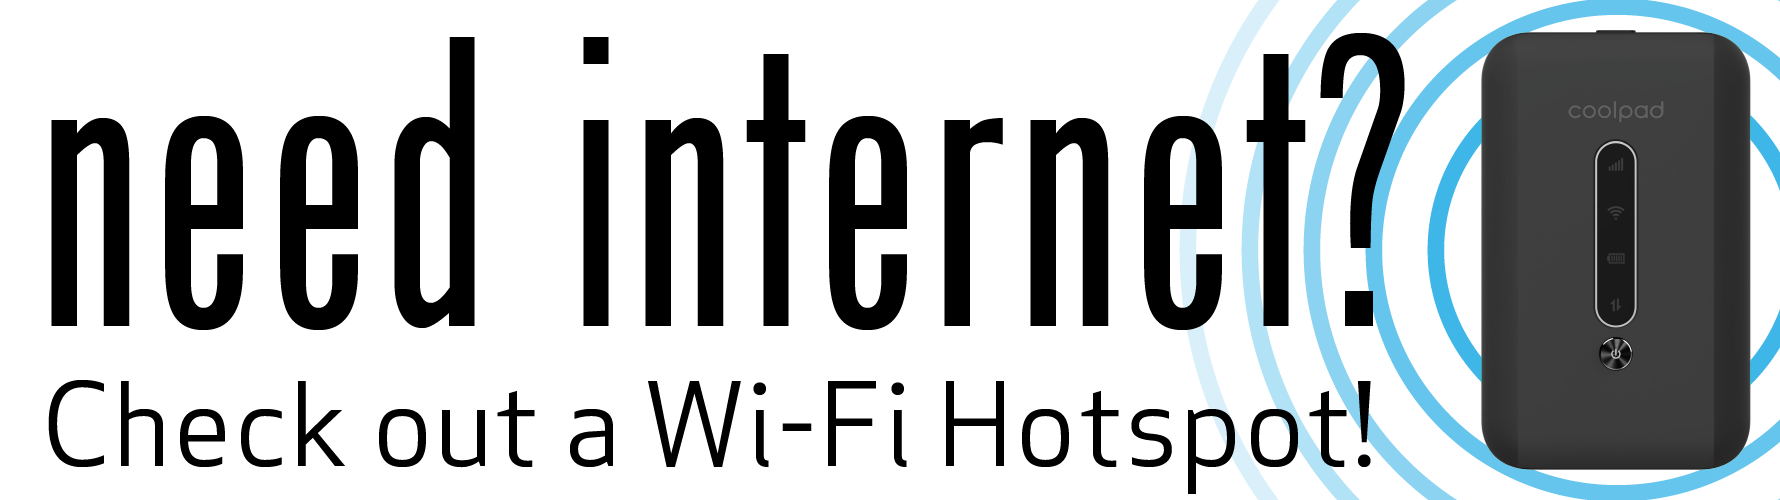 Need internet? Check out a Wi-Fi Hotspot!